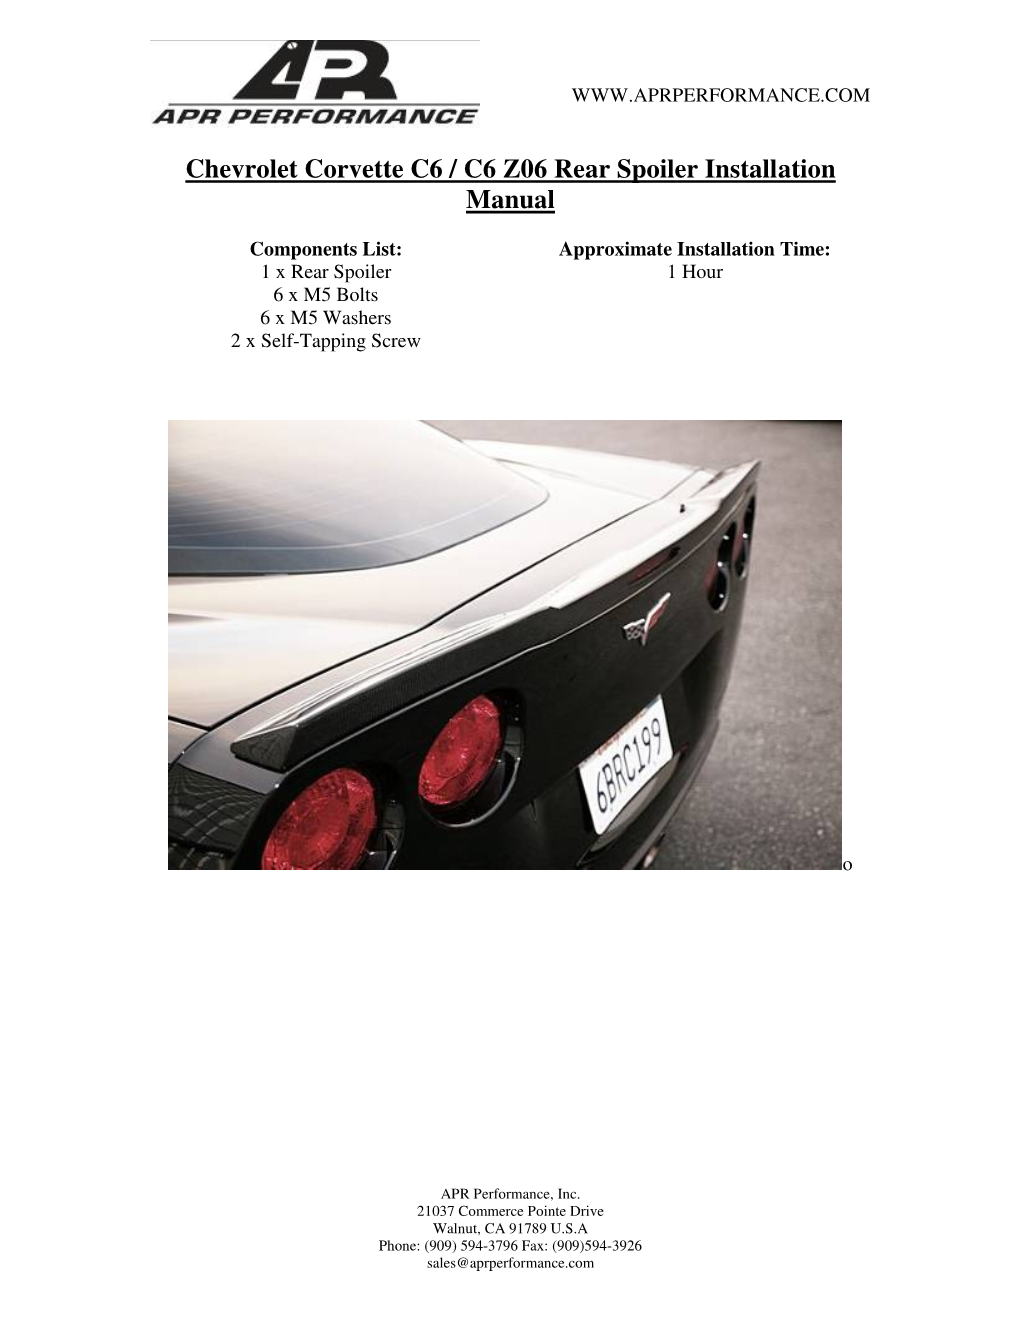 Chevrolet Corvette C6 / C6 Z06 Rear Spoiler Installation Manual